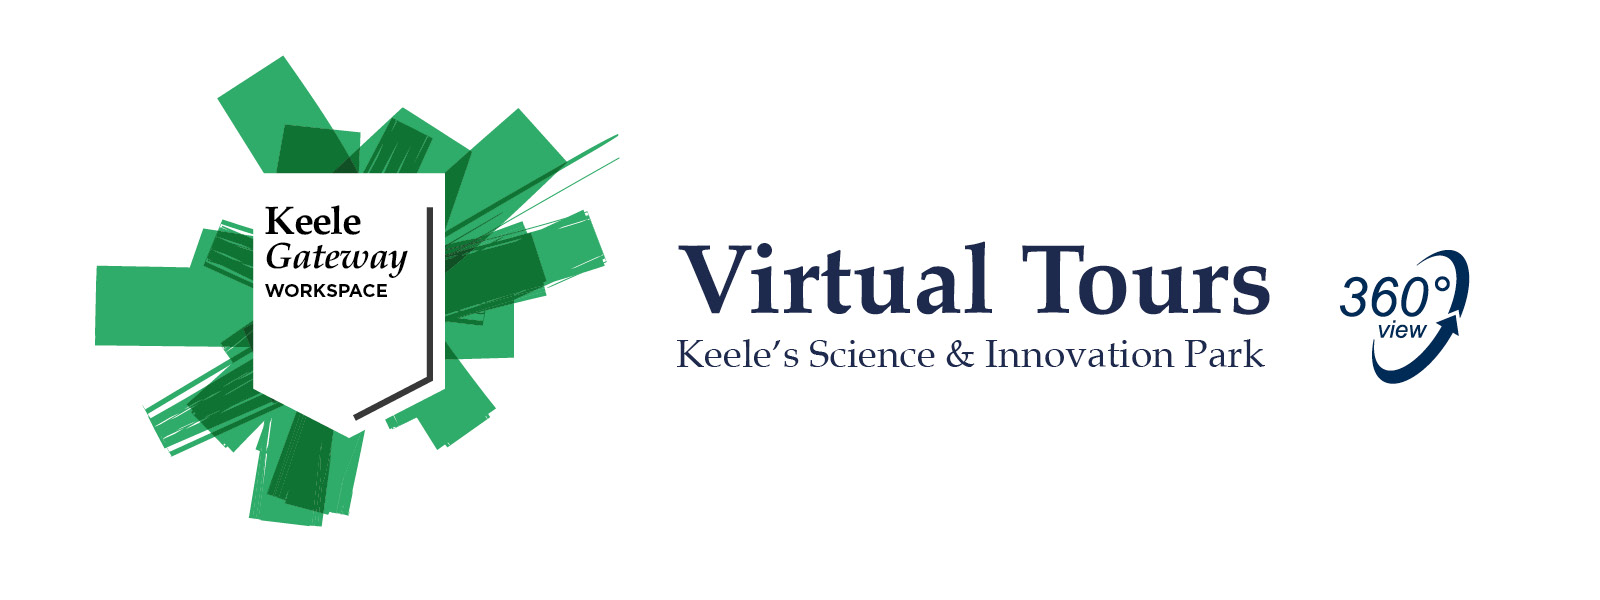 workspace logo and vitural tour  